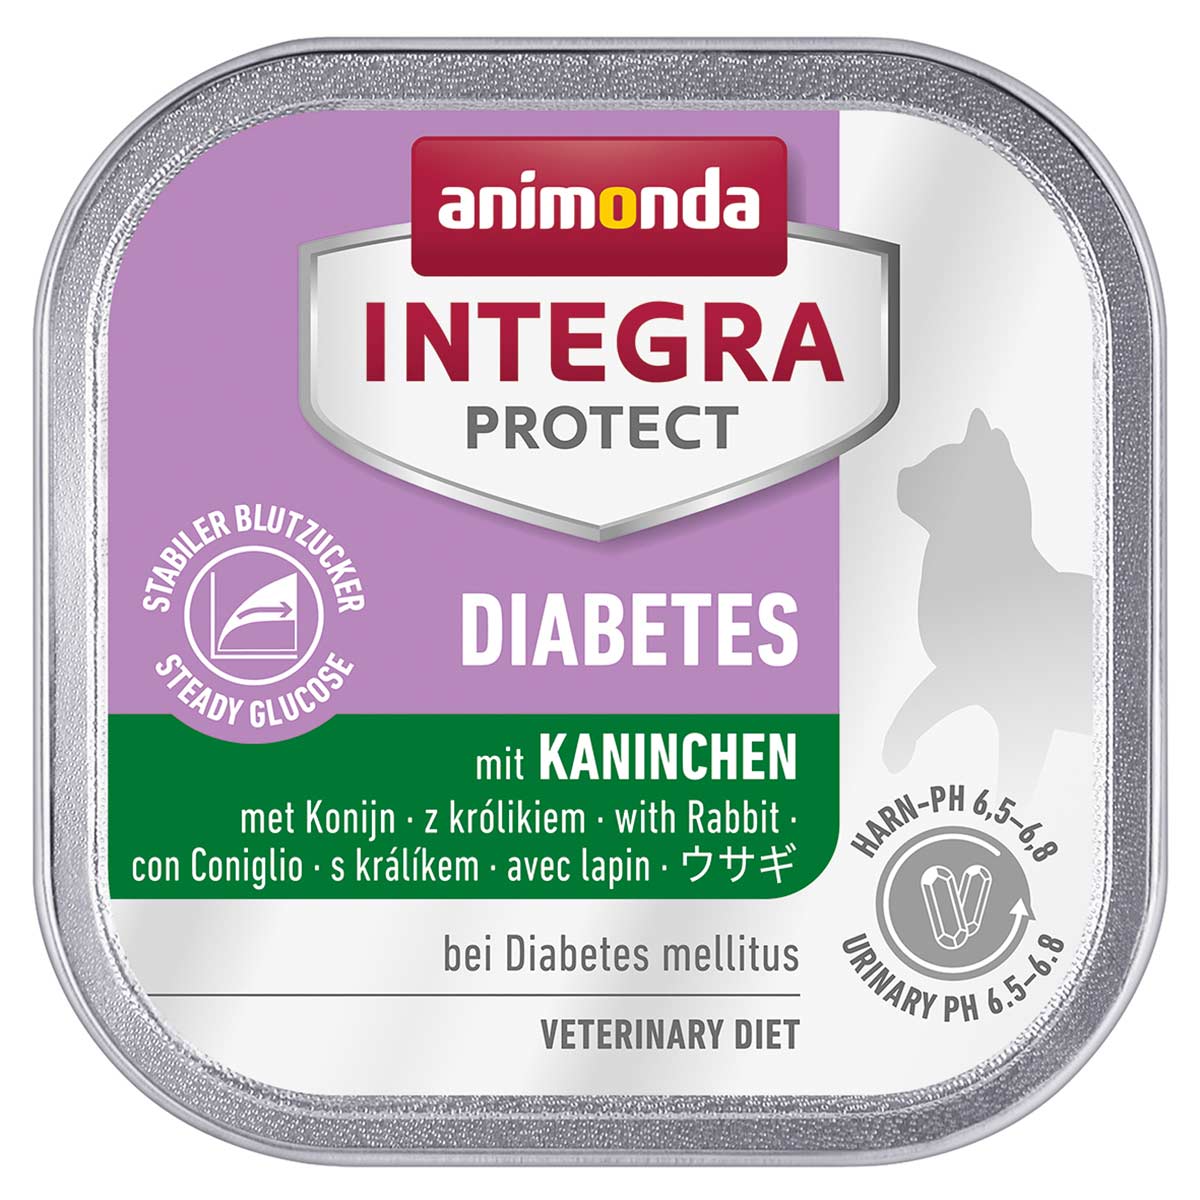 animonda IINTEGRA PROTECT Diabetes mit Kaninchen 6x100g